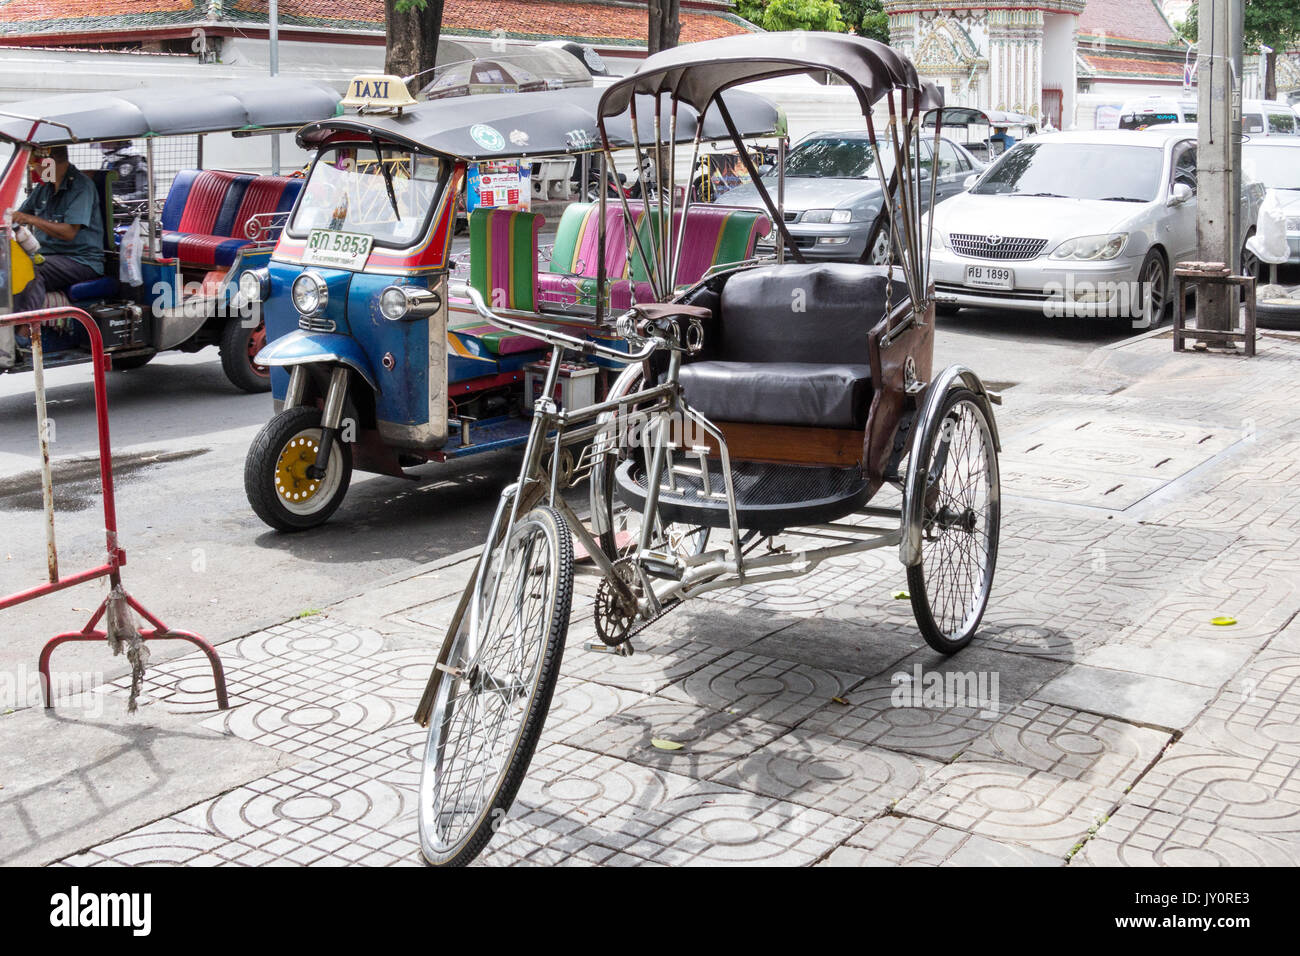 Rickshaw on pavement with tuk tuks in the background, Bangkok, Thailand Stock Photo